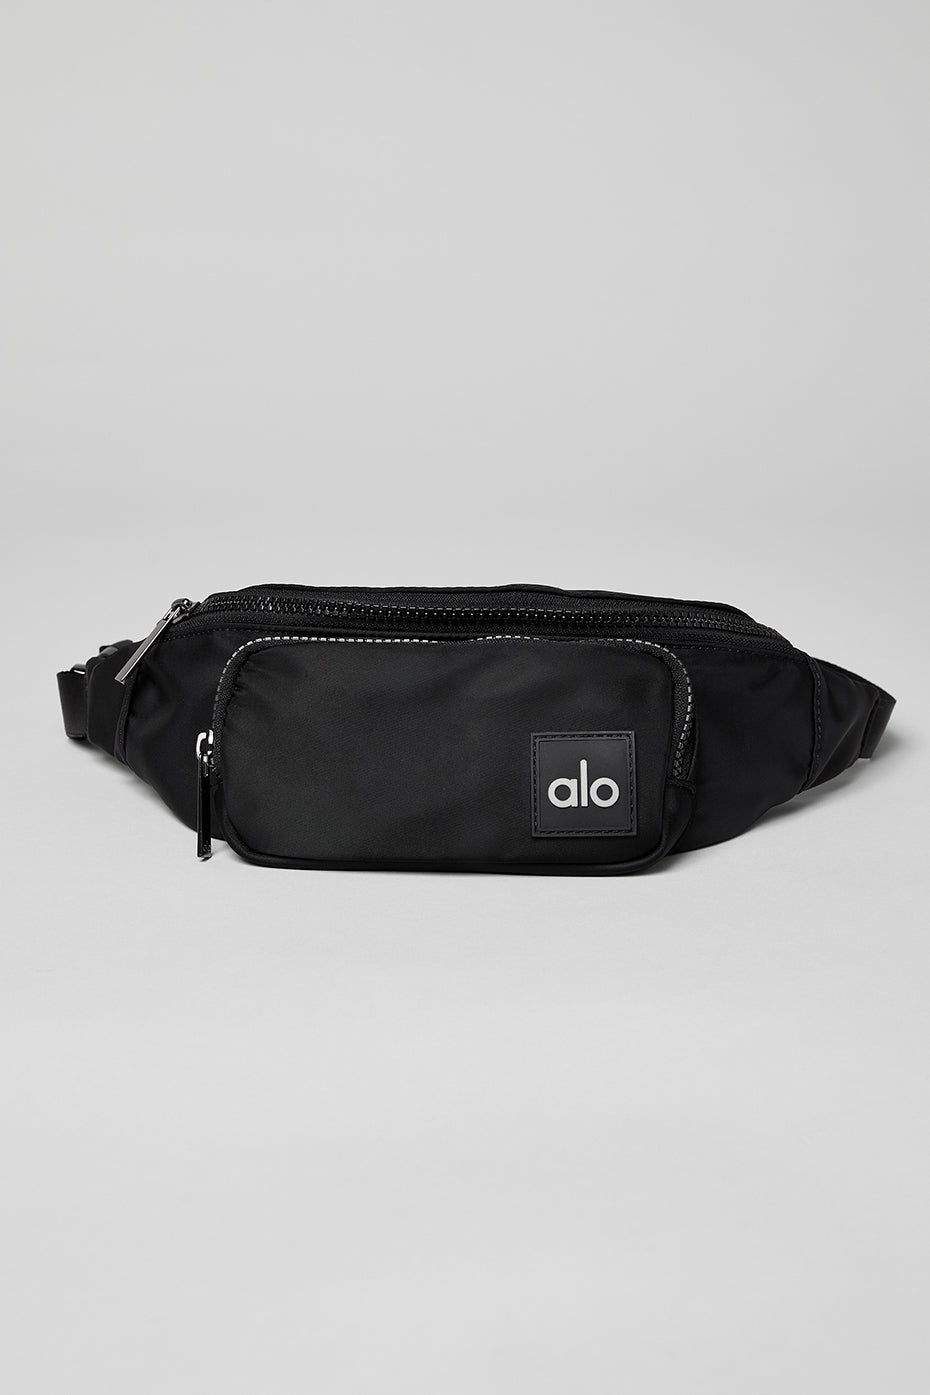 Alo Yoga  Traverse Duffle Bag in Black/Silver - ShopStyle Travel